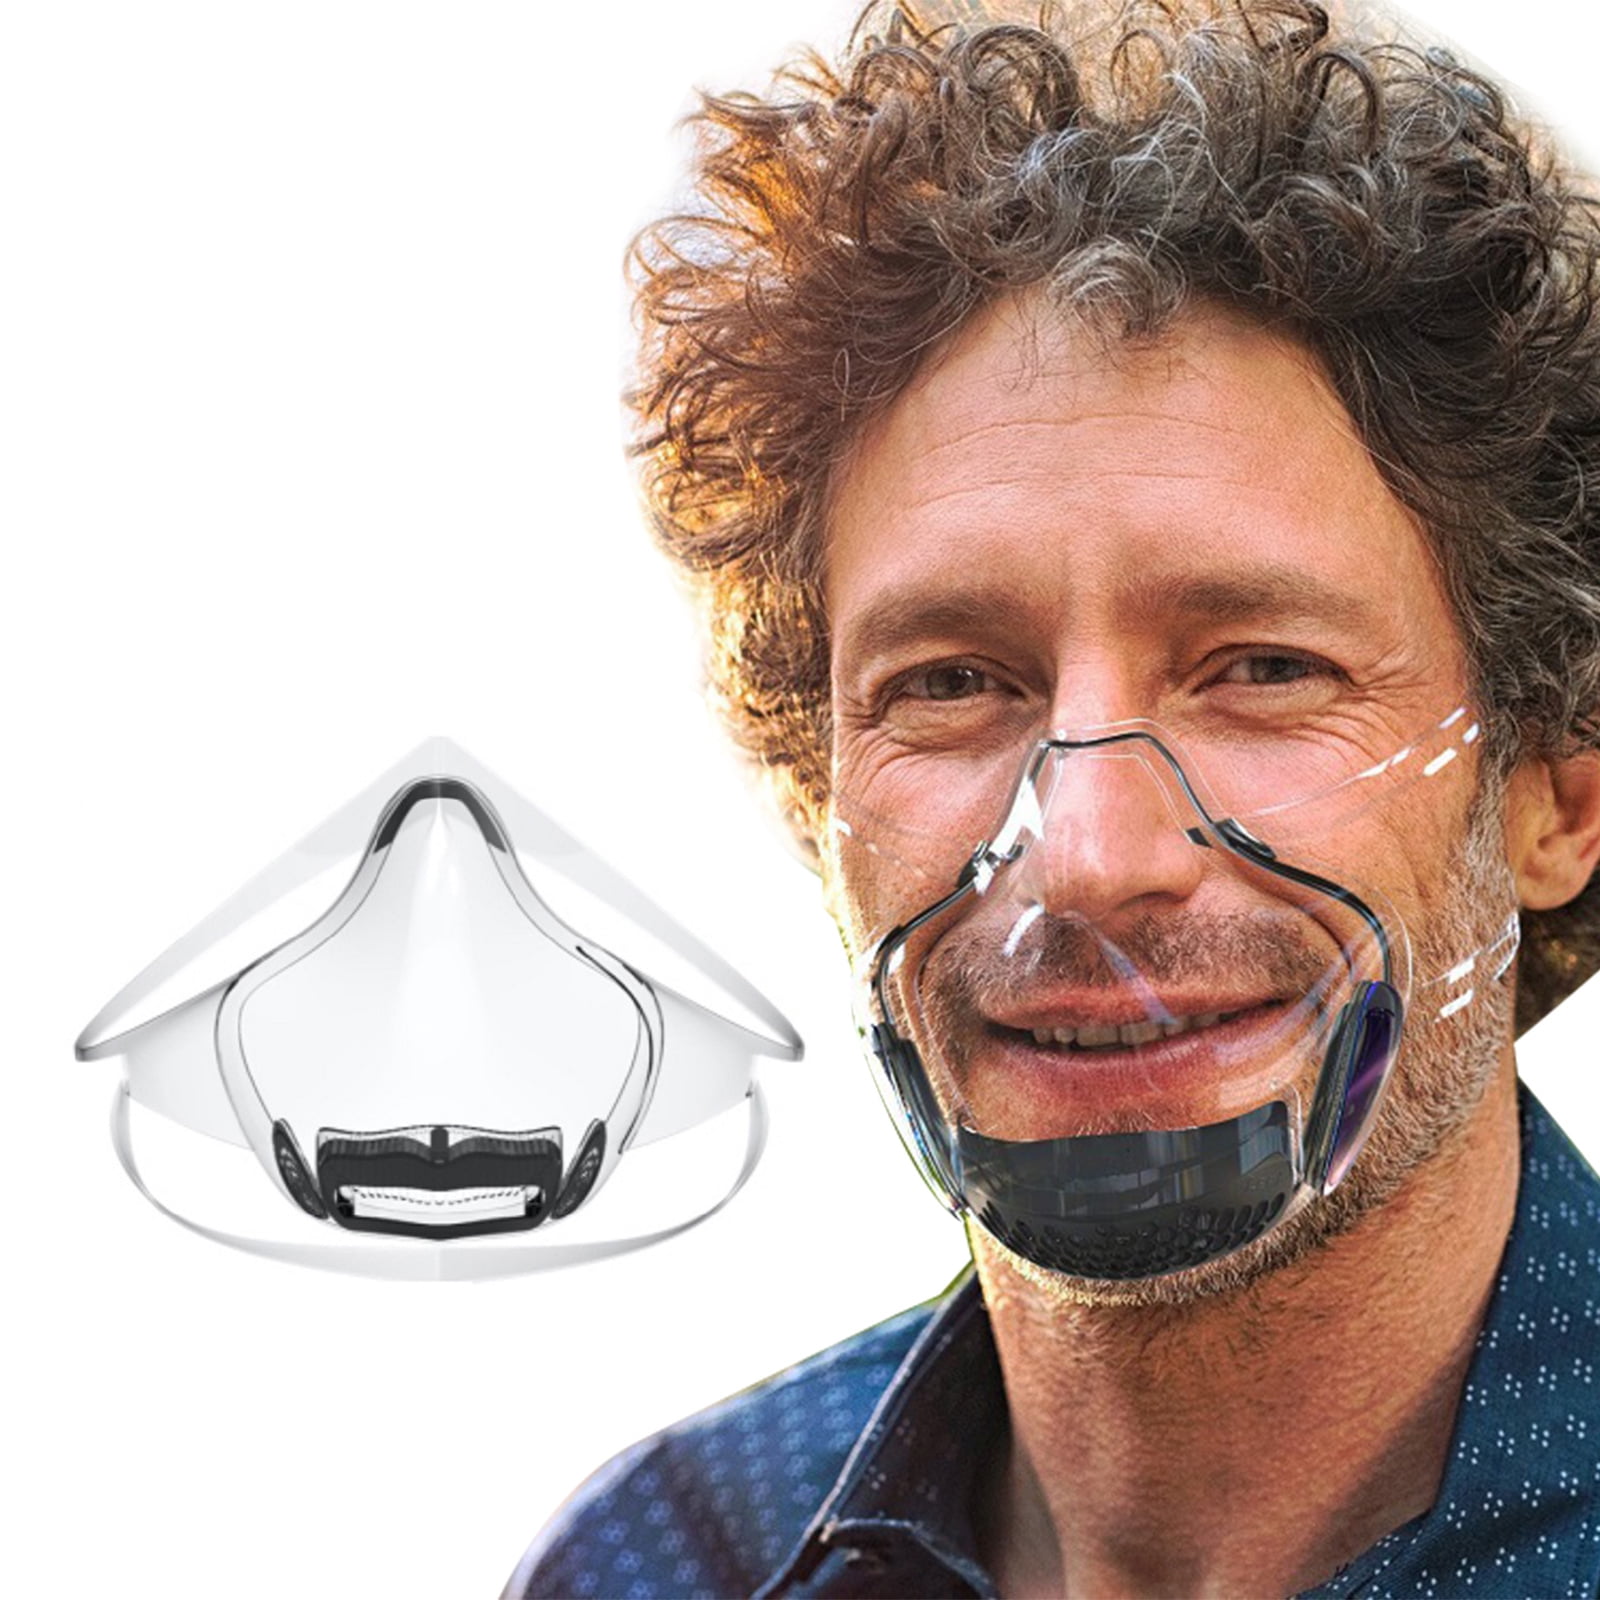 Kalgaden Clear Face Shield Masks, Soft Rubber Edging Transparent Face Masks with Detachable Flter, Ultra Protective Visible Breathable Anti-Fog